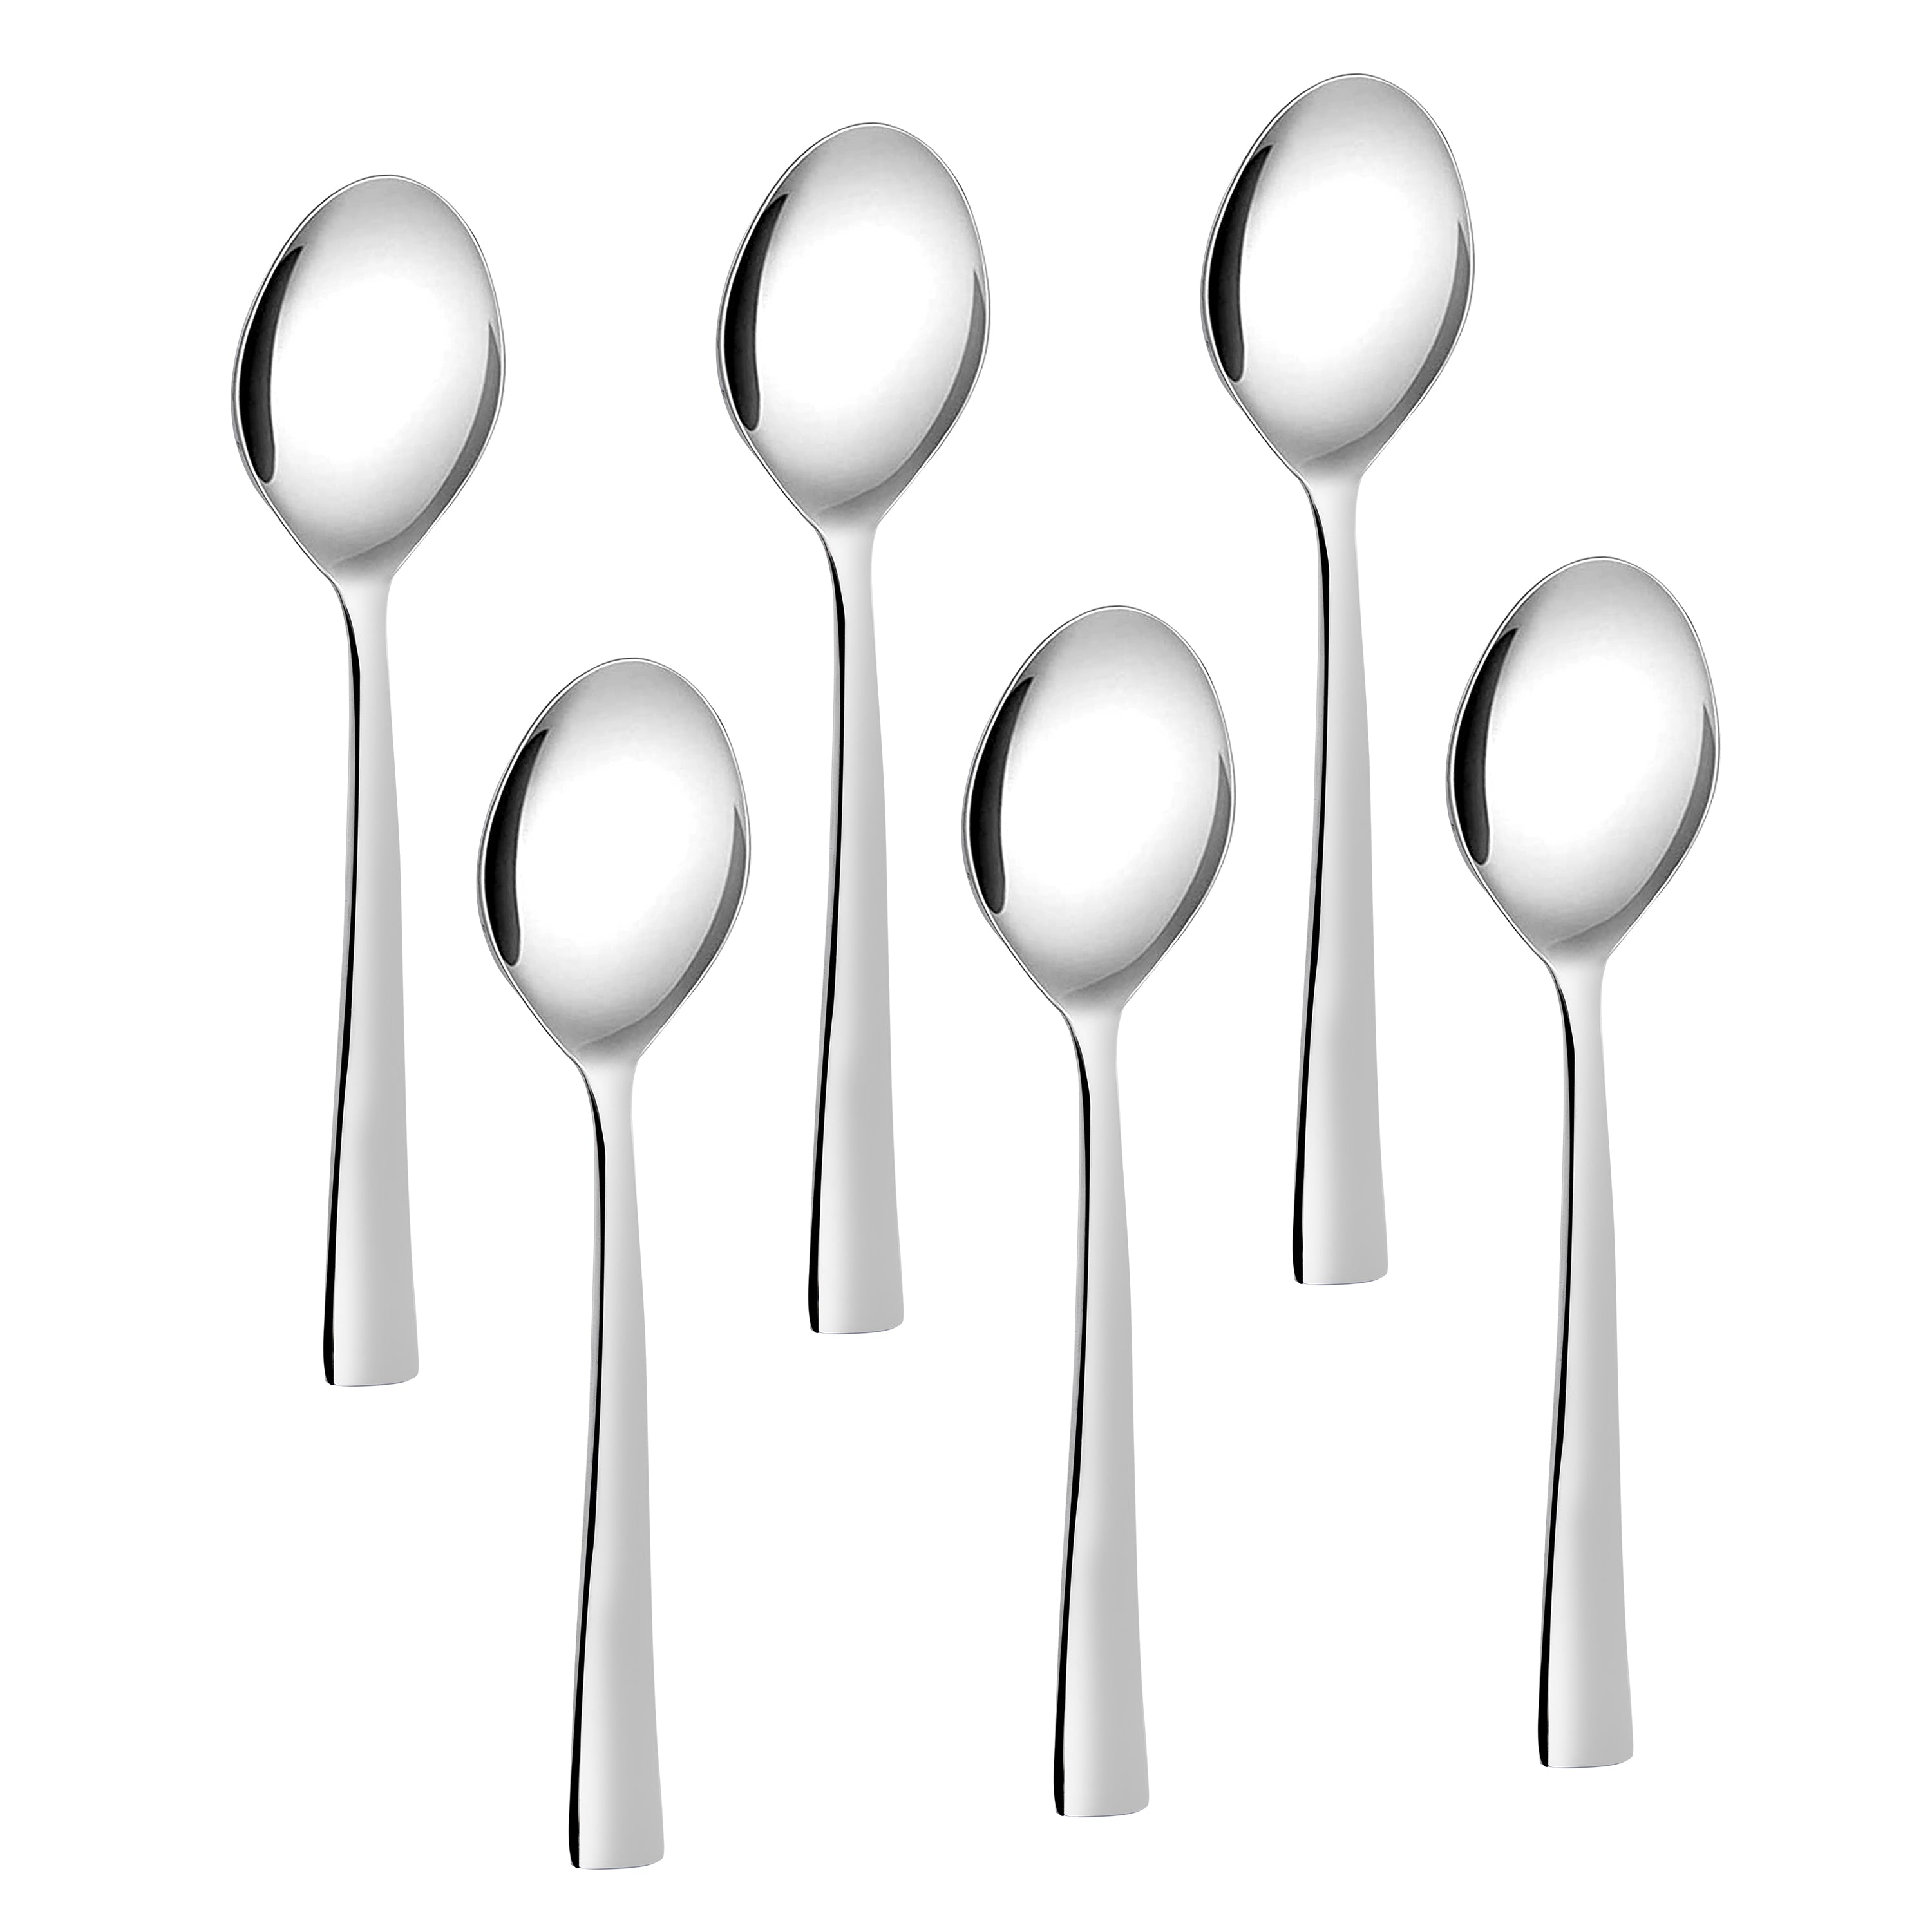 Arias Fiesta Baby Spoon Set of 6 (Silver)